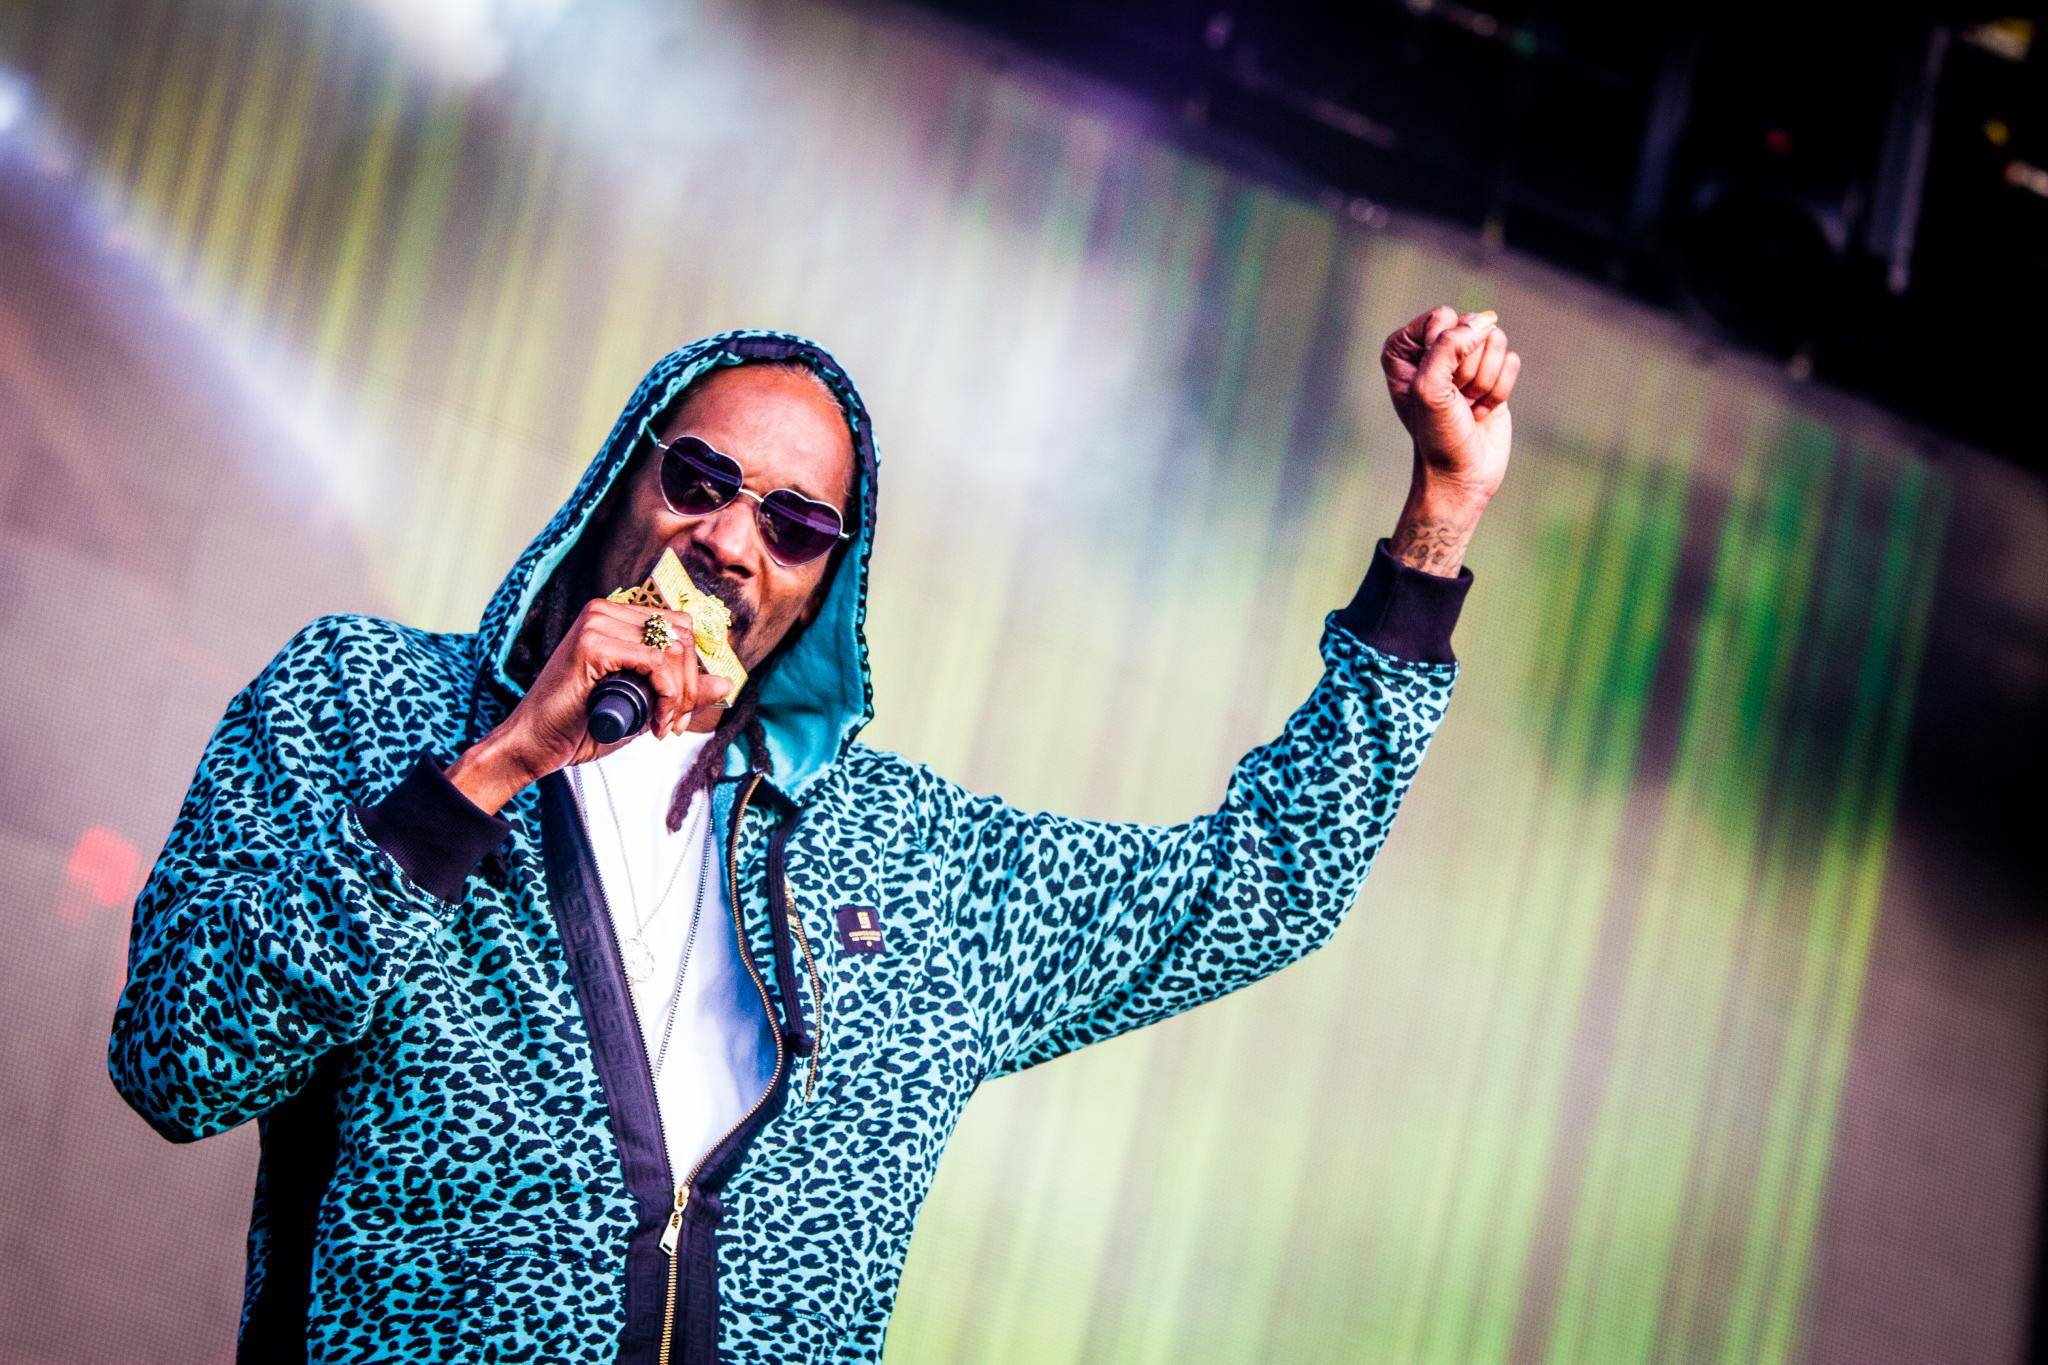 Snoop Dogg A.K.A. Snoop Lion